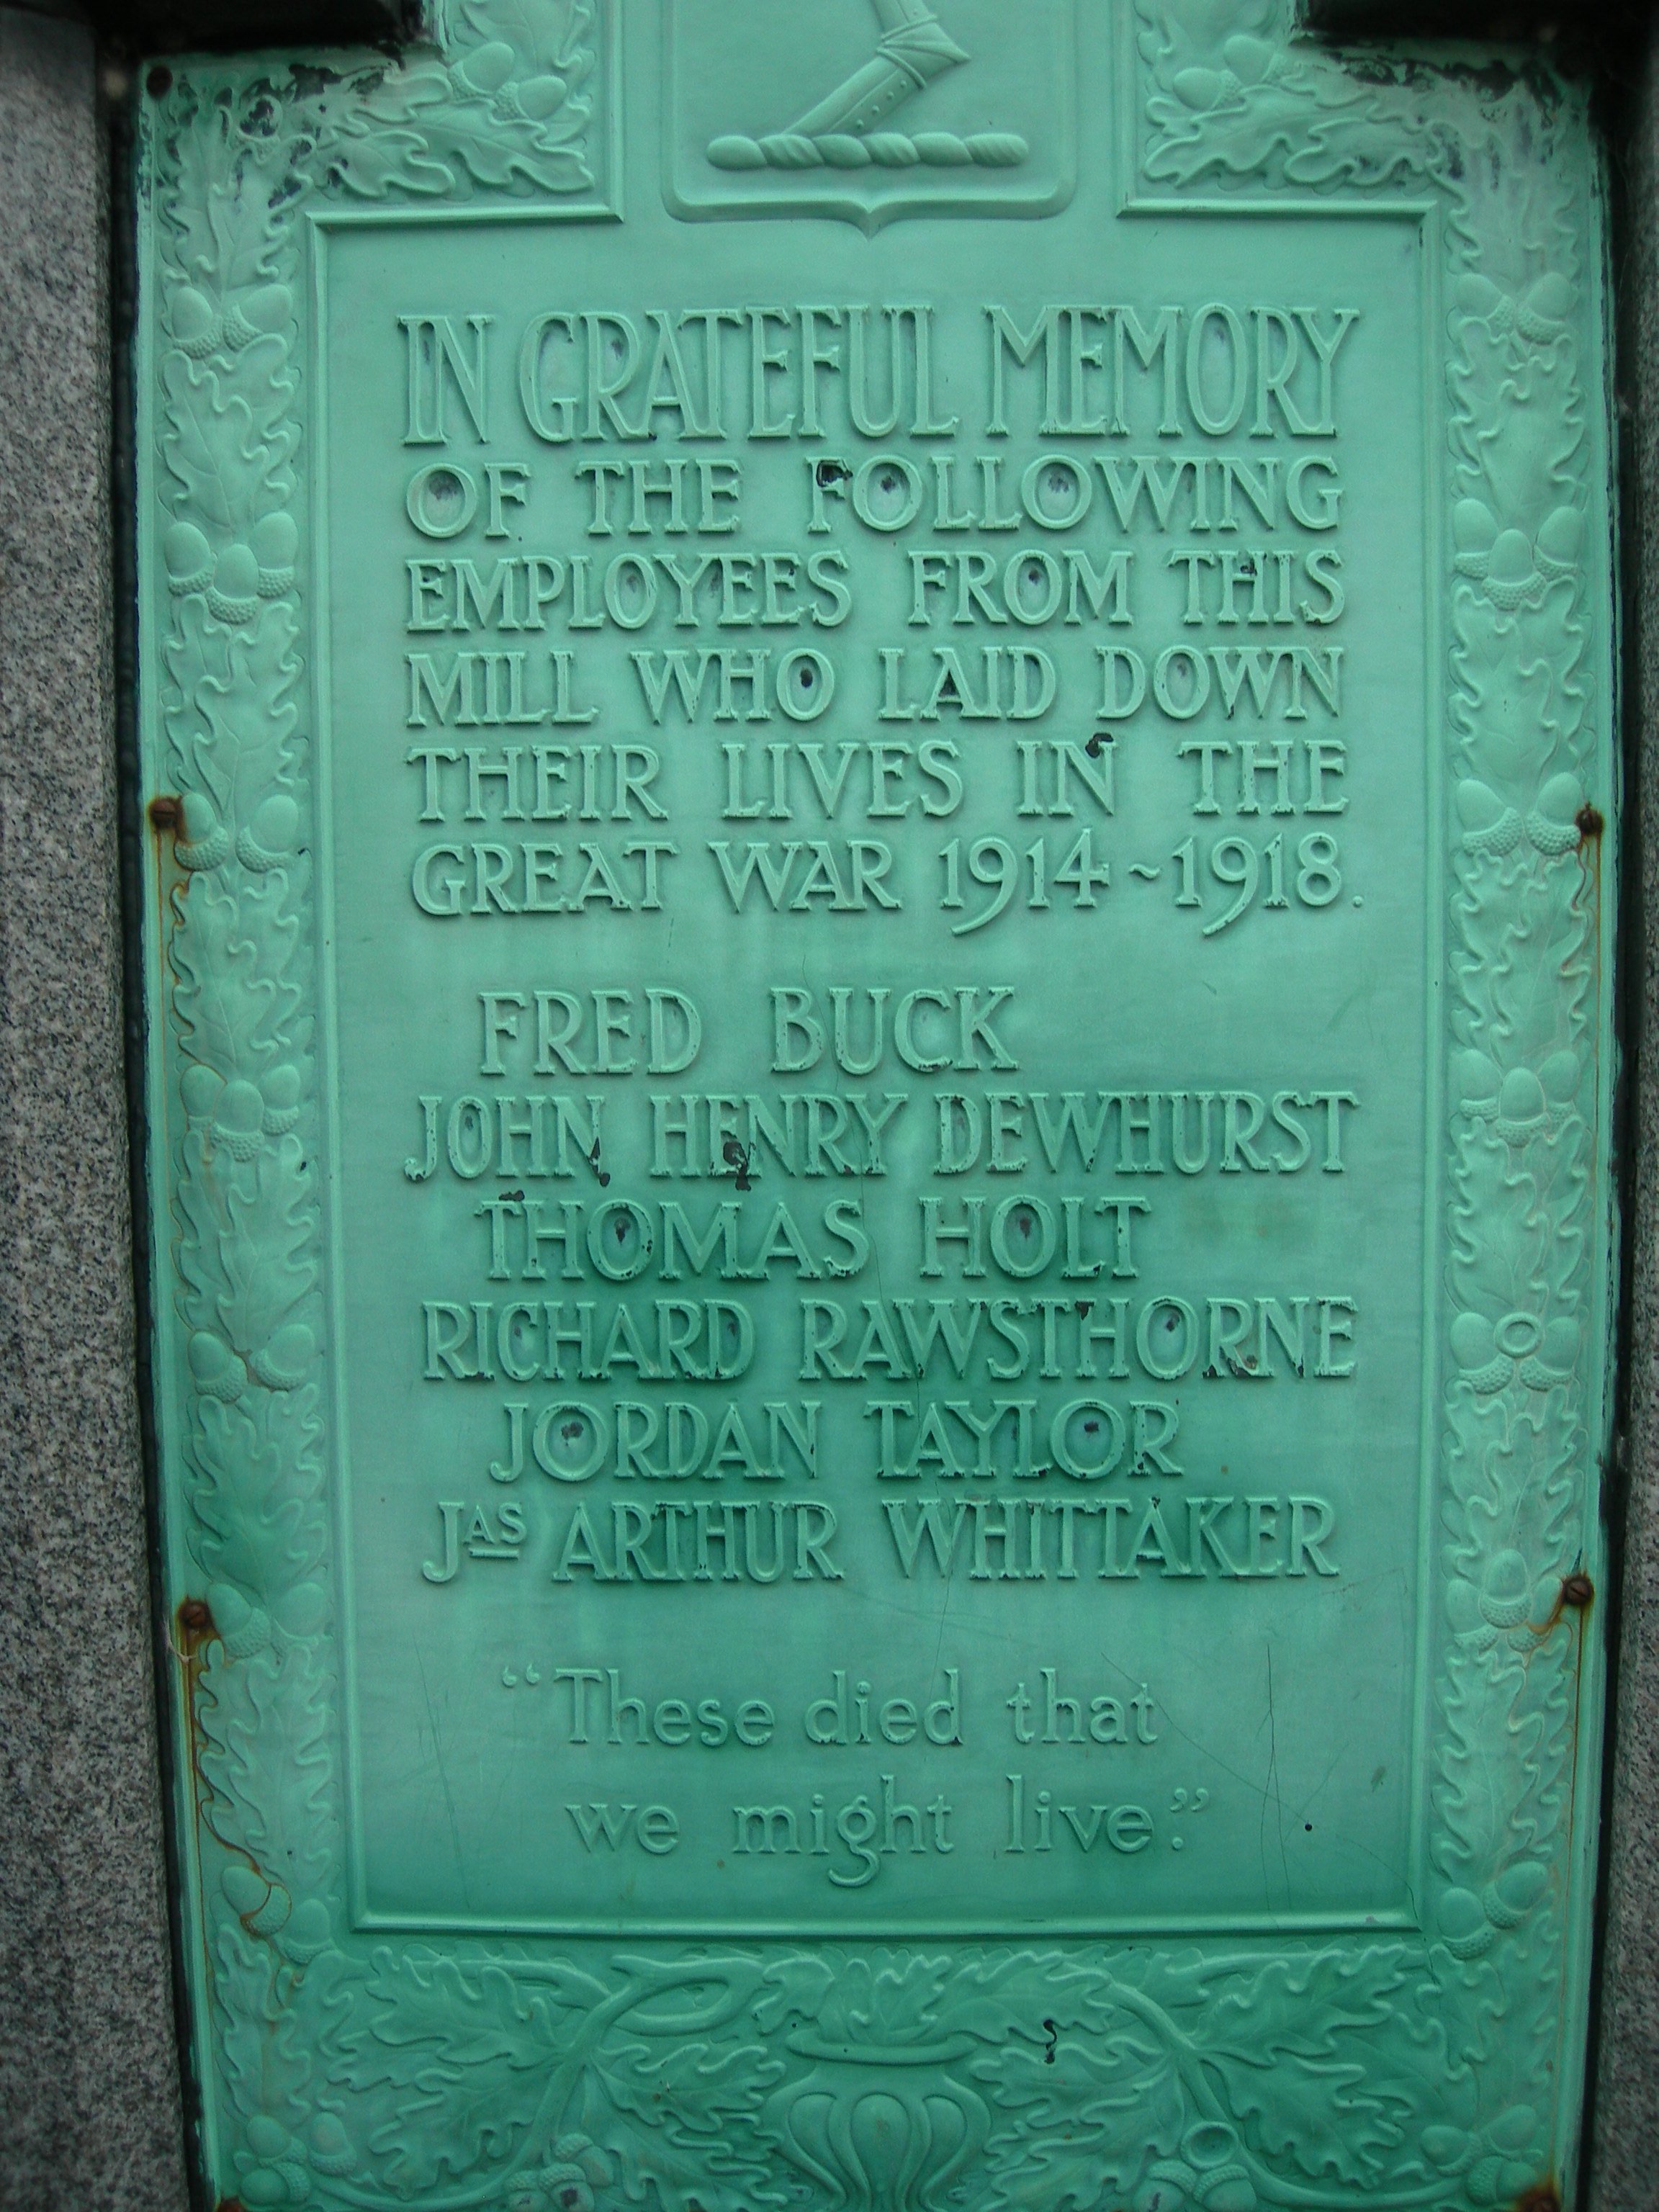 Irwell Vale Memorial